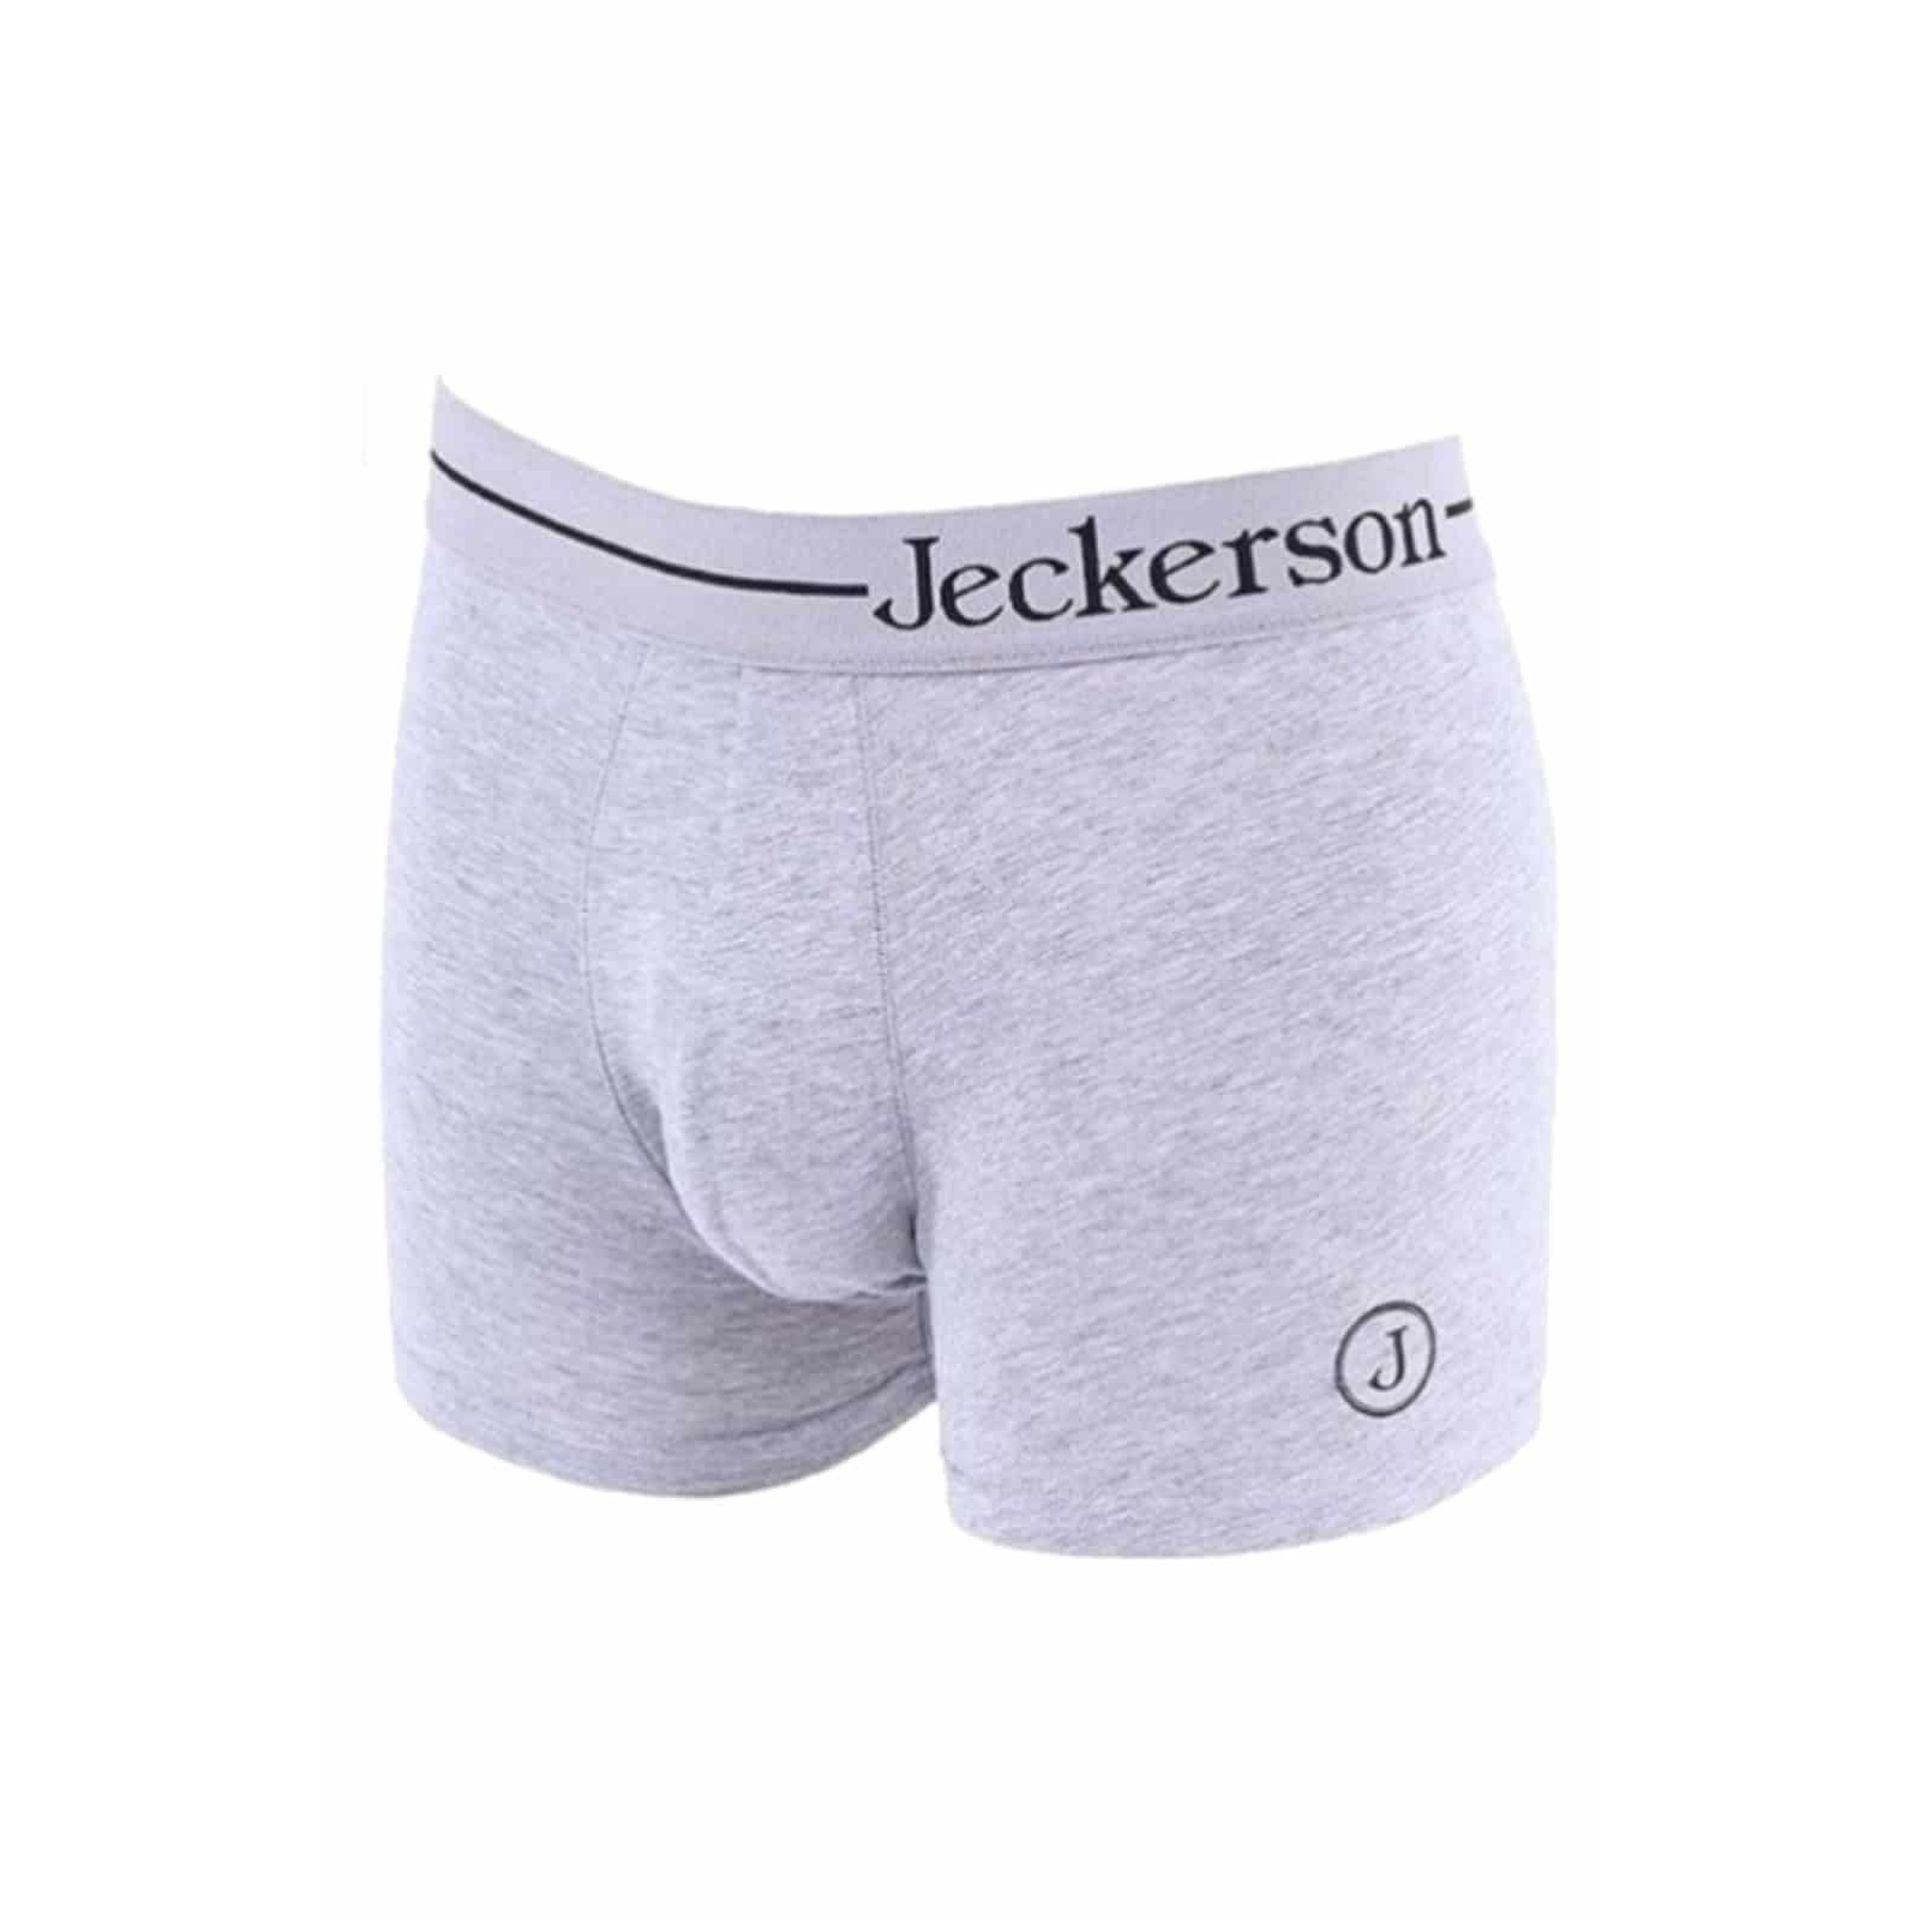 Jeckerson Boxers - TheNumber1Shop.com